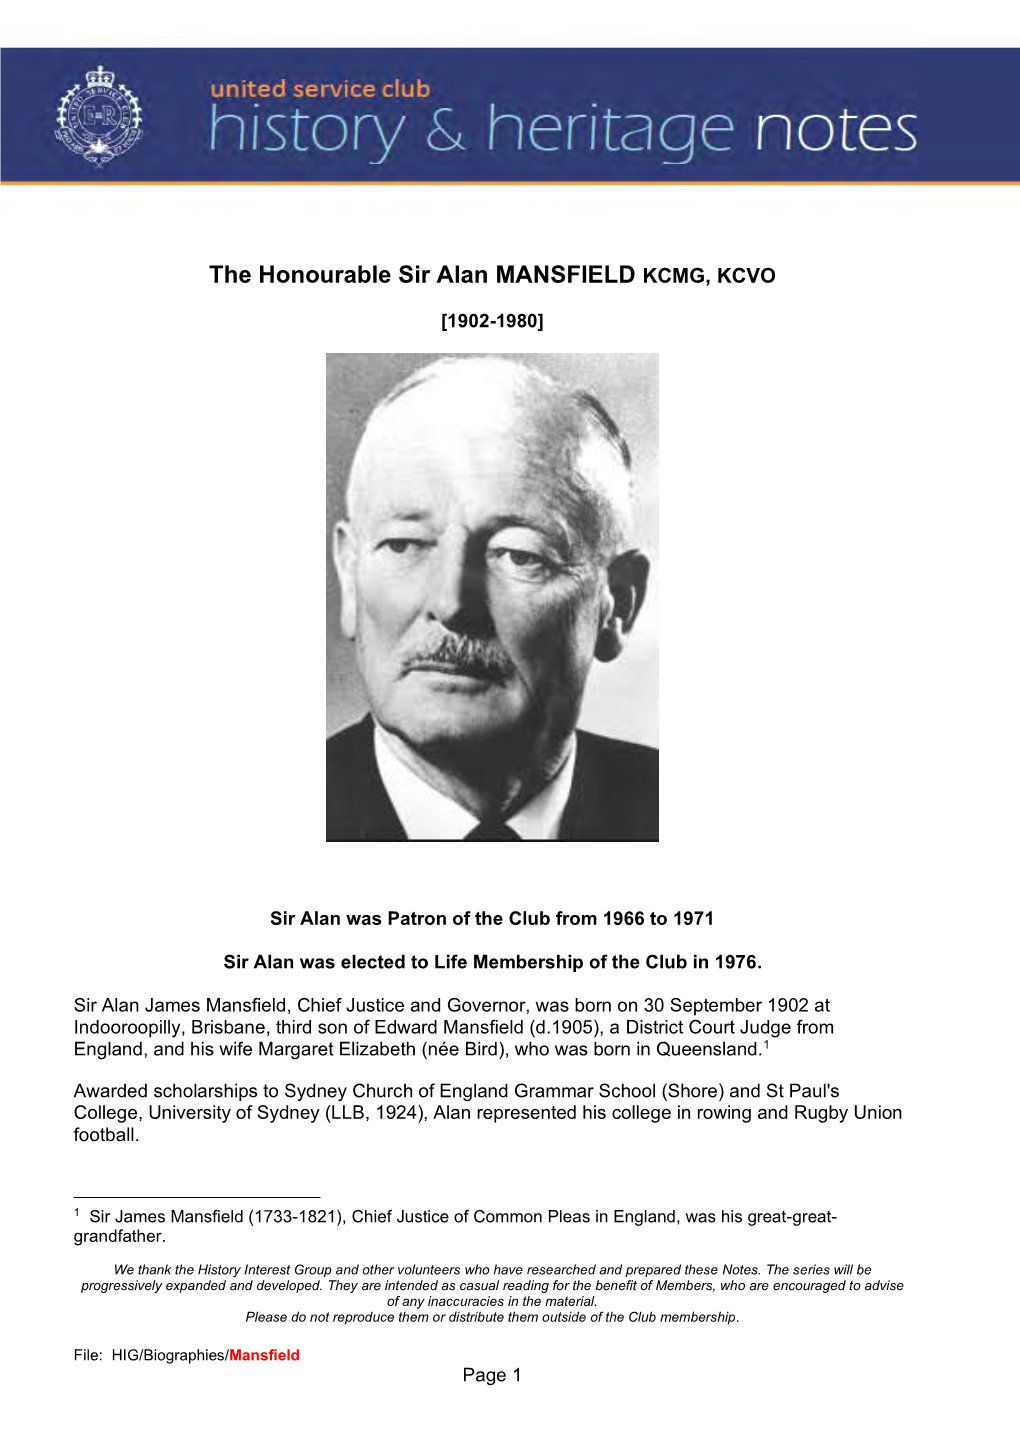 1966 – 1971 the Honourable Sir Alan MANSFIELD KCMG, KCVO